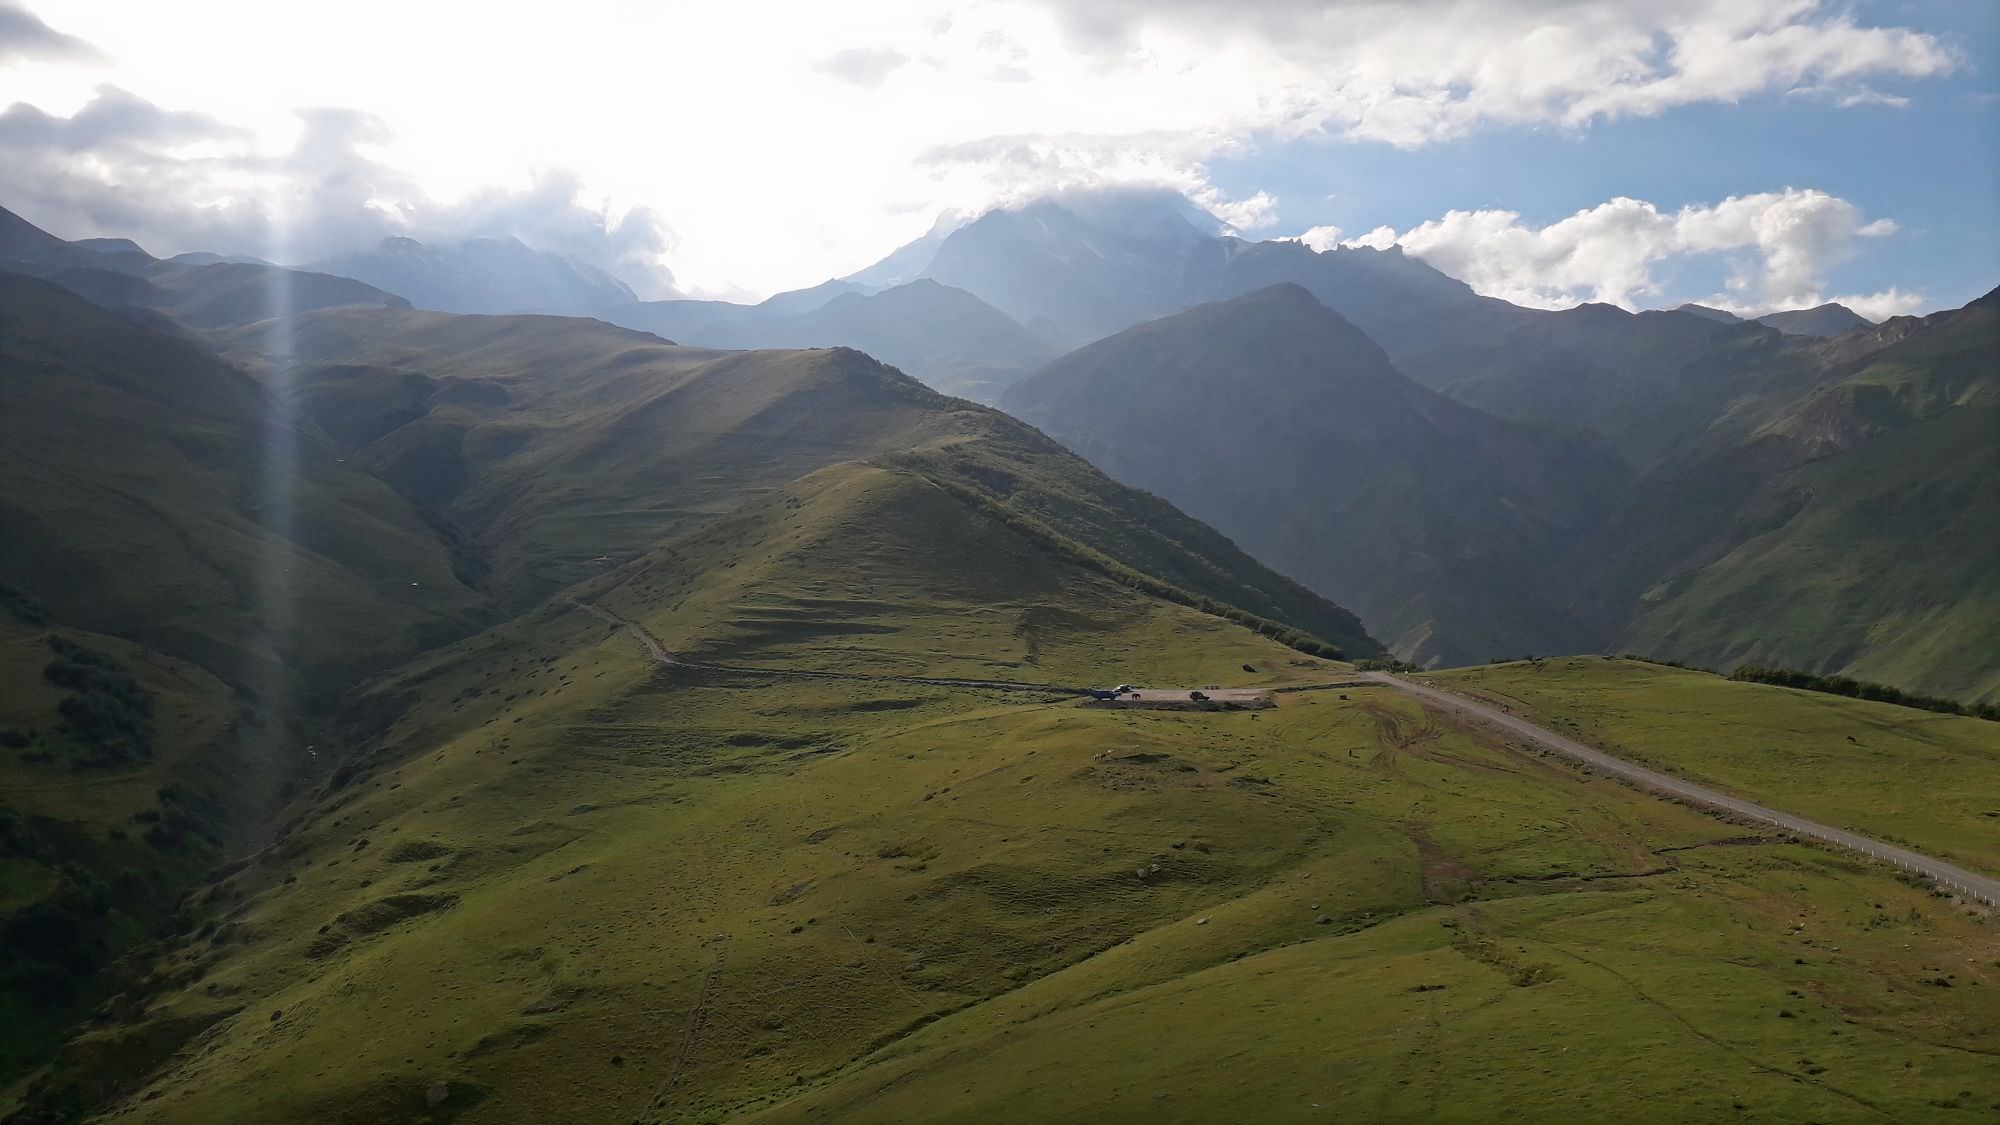 Views from the church towards Mt. Kazbek